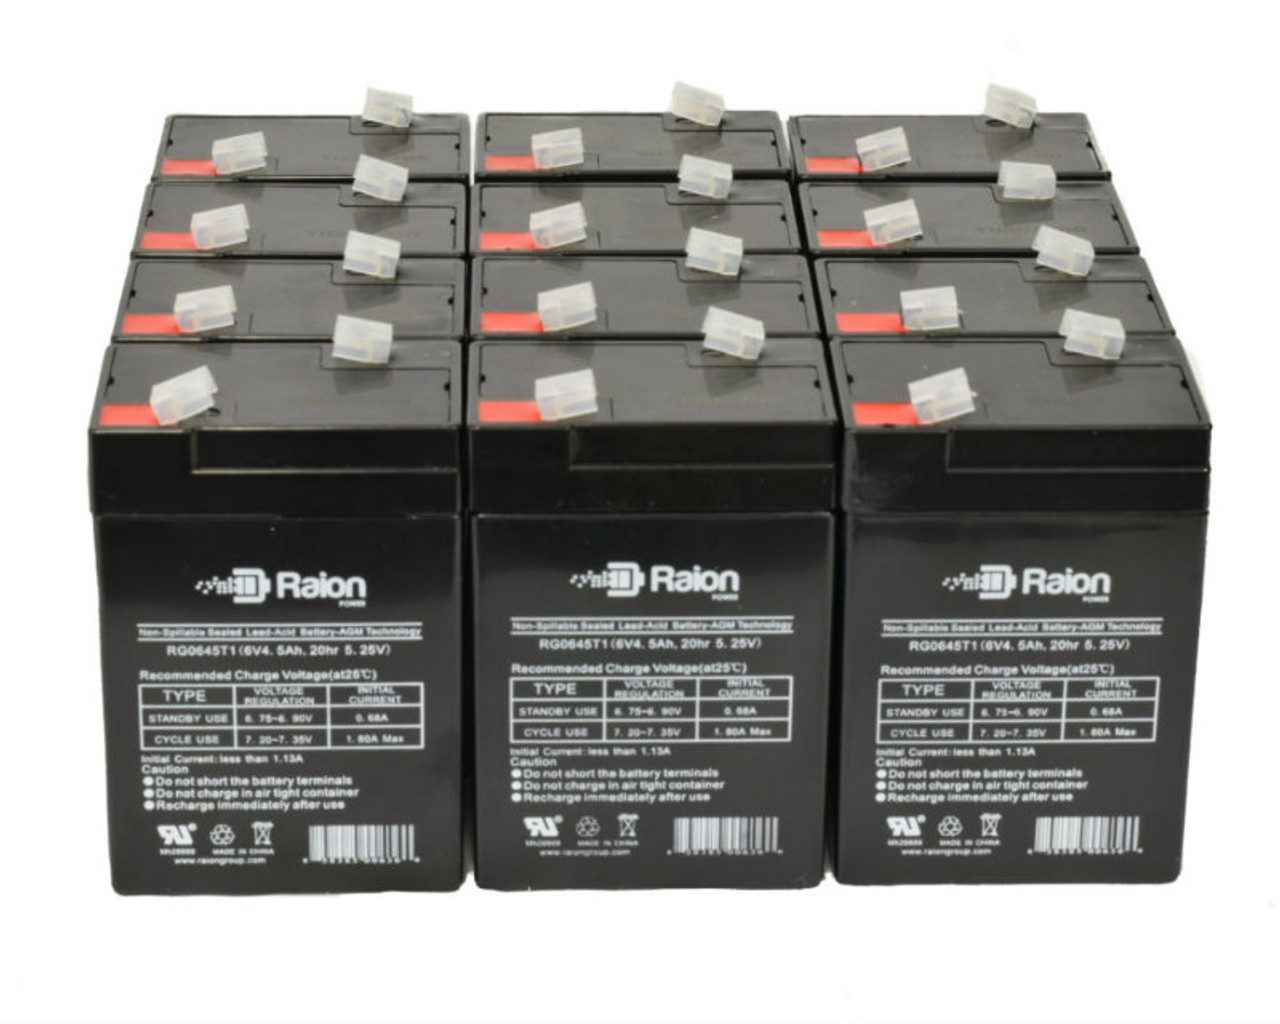 Raion Power 6V 4.5Ah Replacement Emergency Light Battery for Teledyne 1180005 - 12 Pack